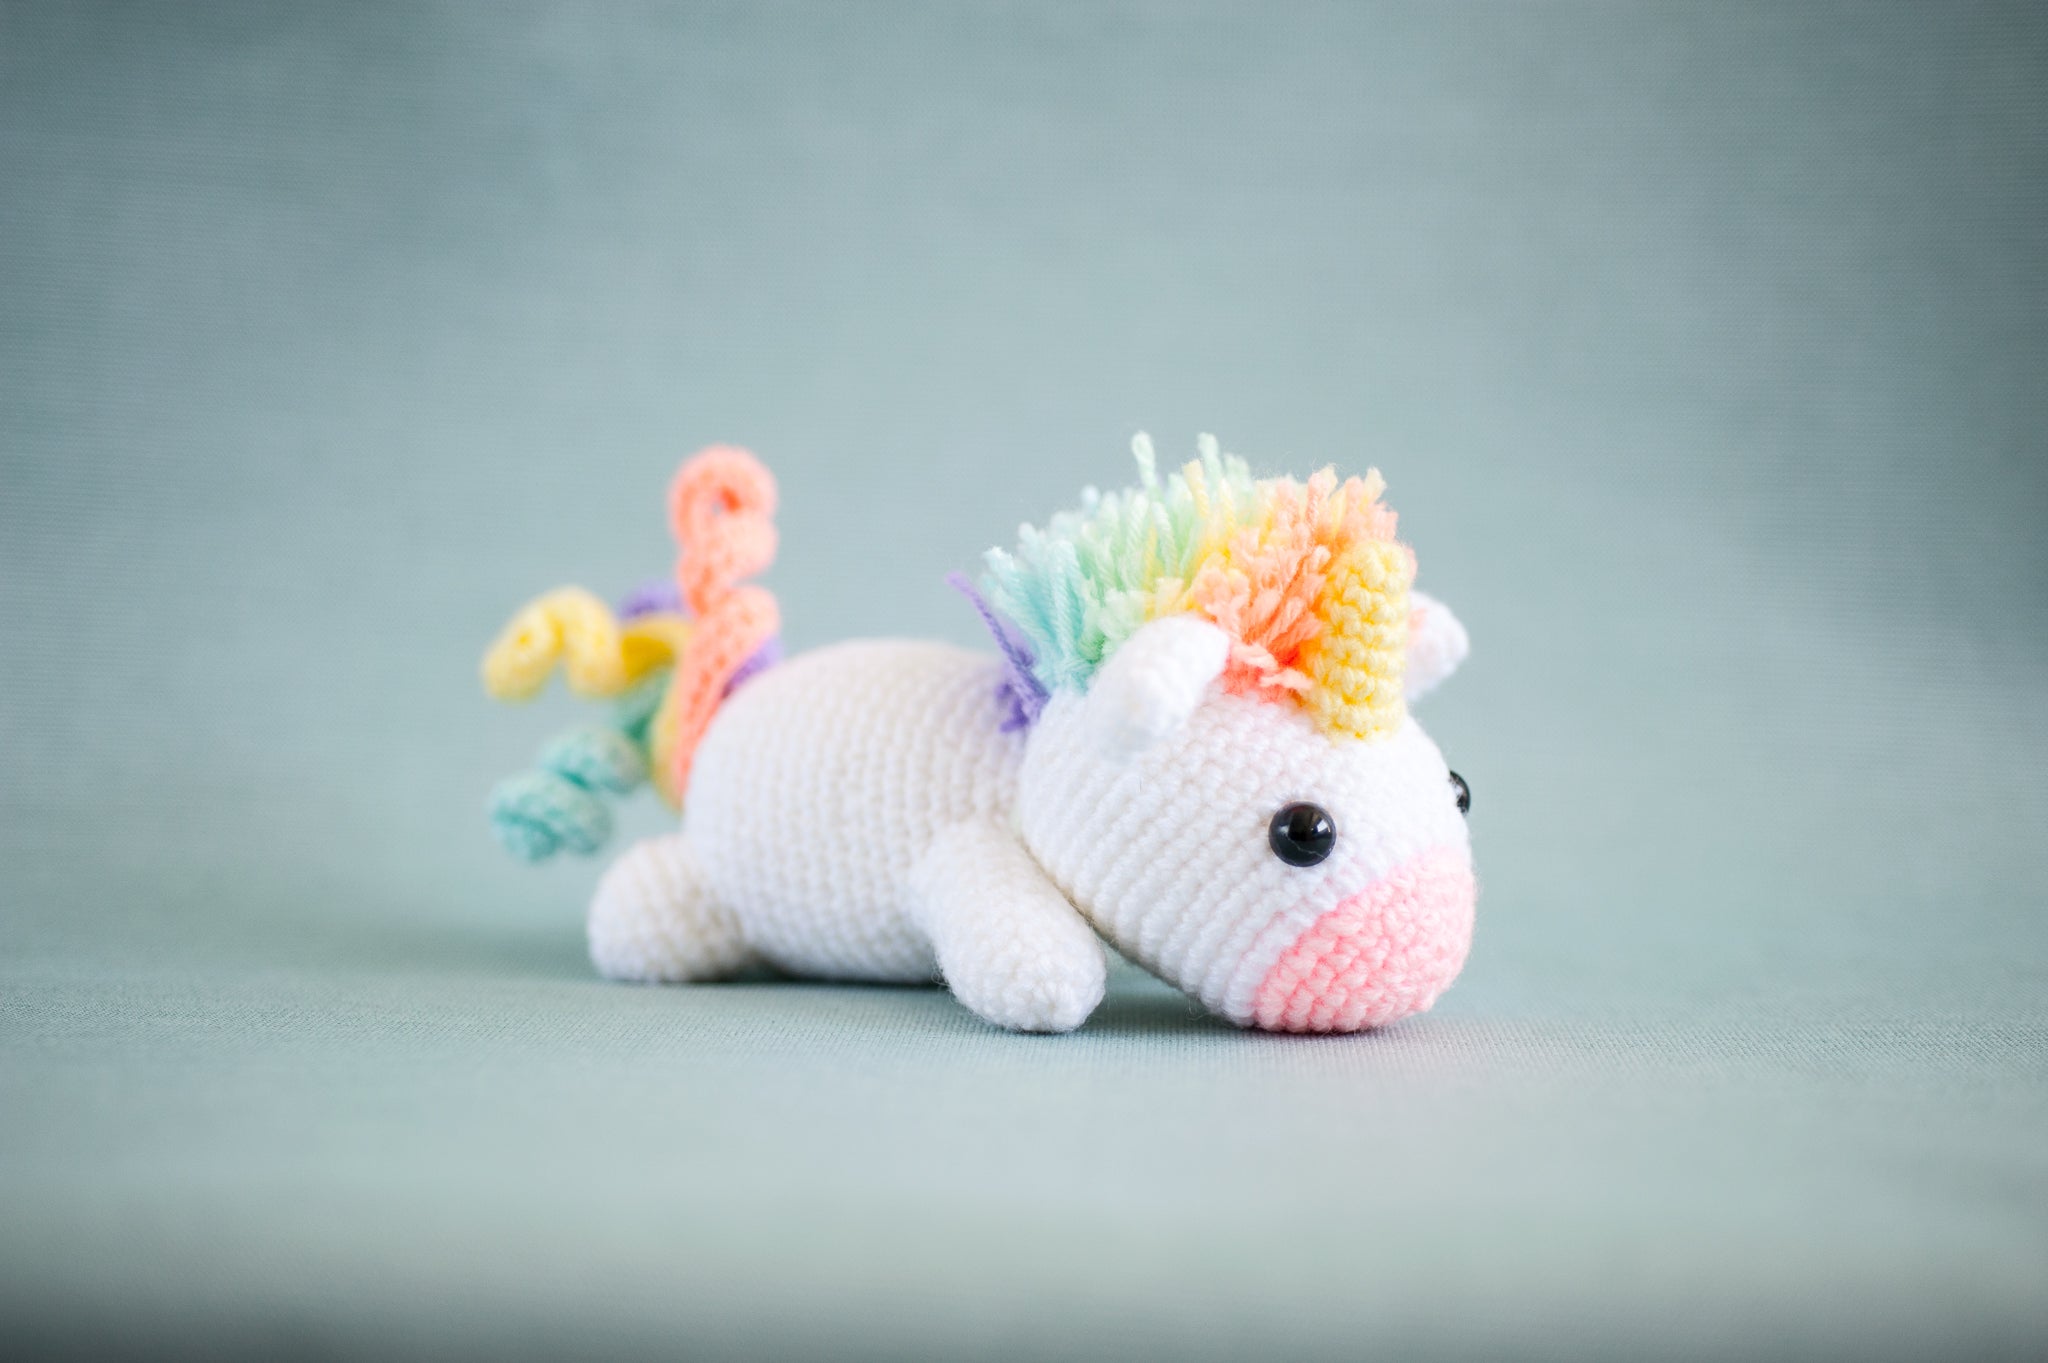 tiny rabbit hole - best top cute kawaii crochet knit amigurumi doll rainbow unicorn